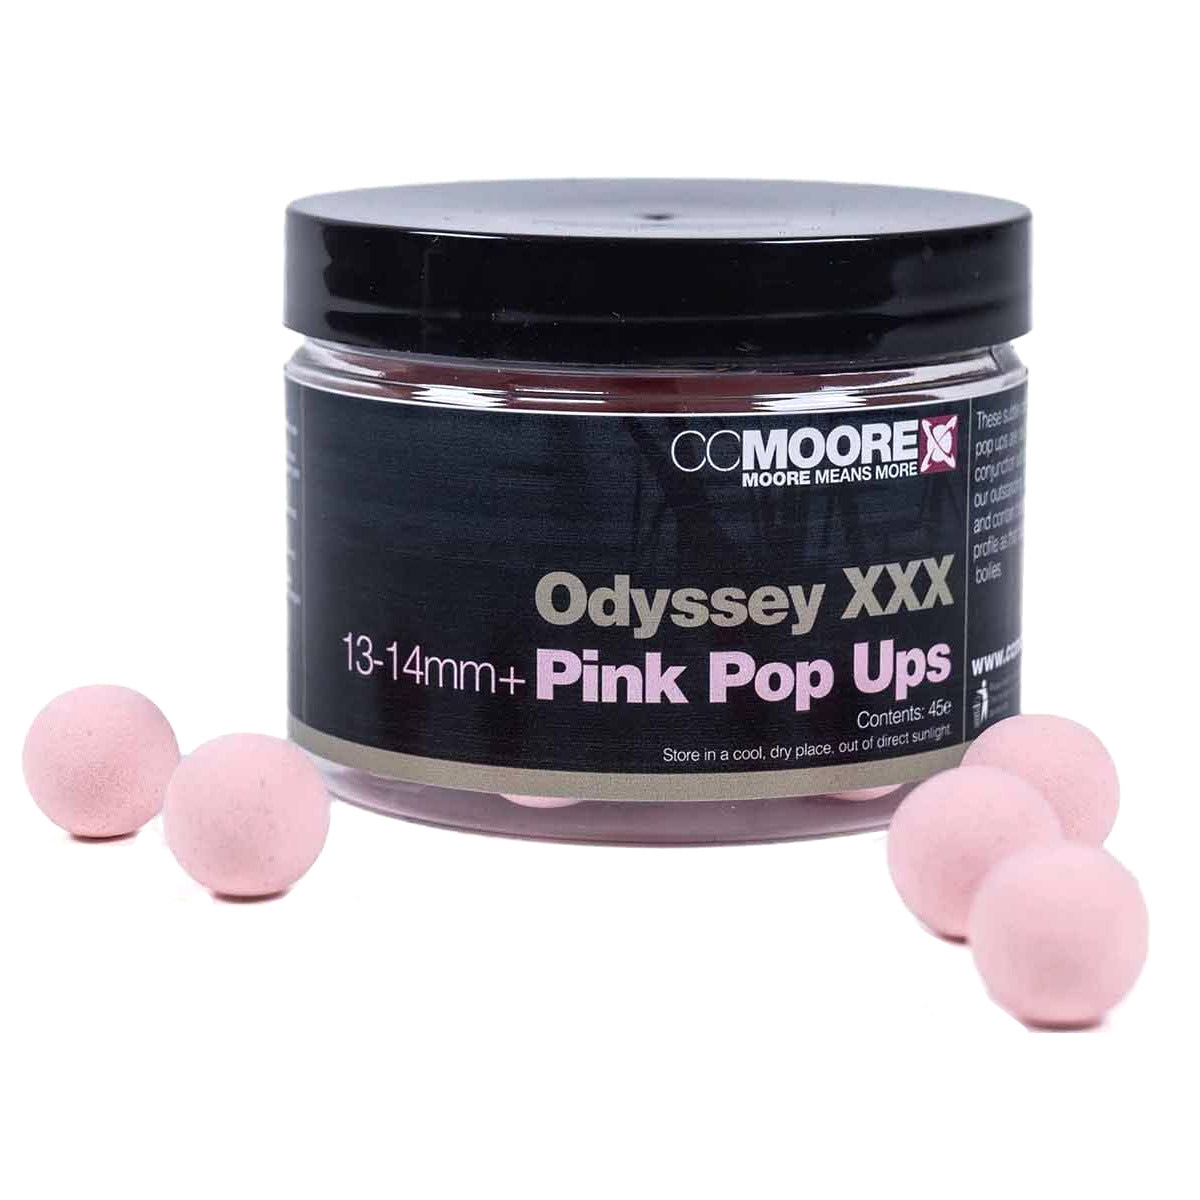 Cc Moore Odyssey XXX Pink Pop Ups 13-14mm